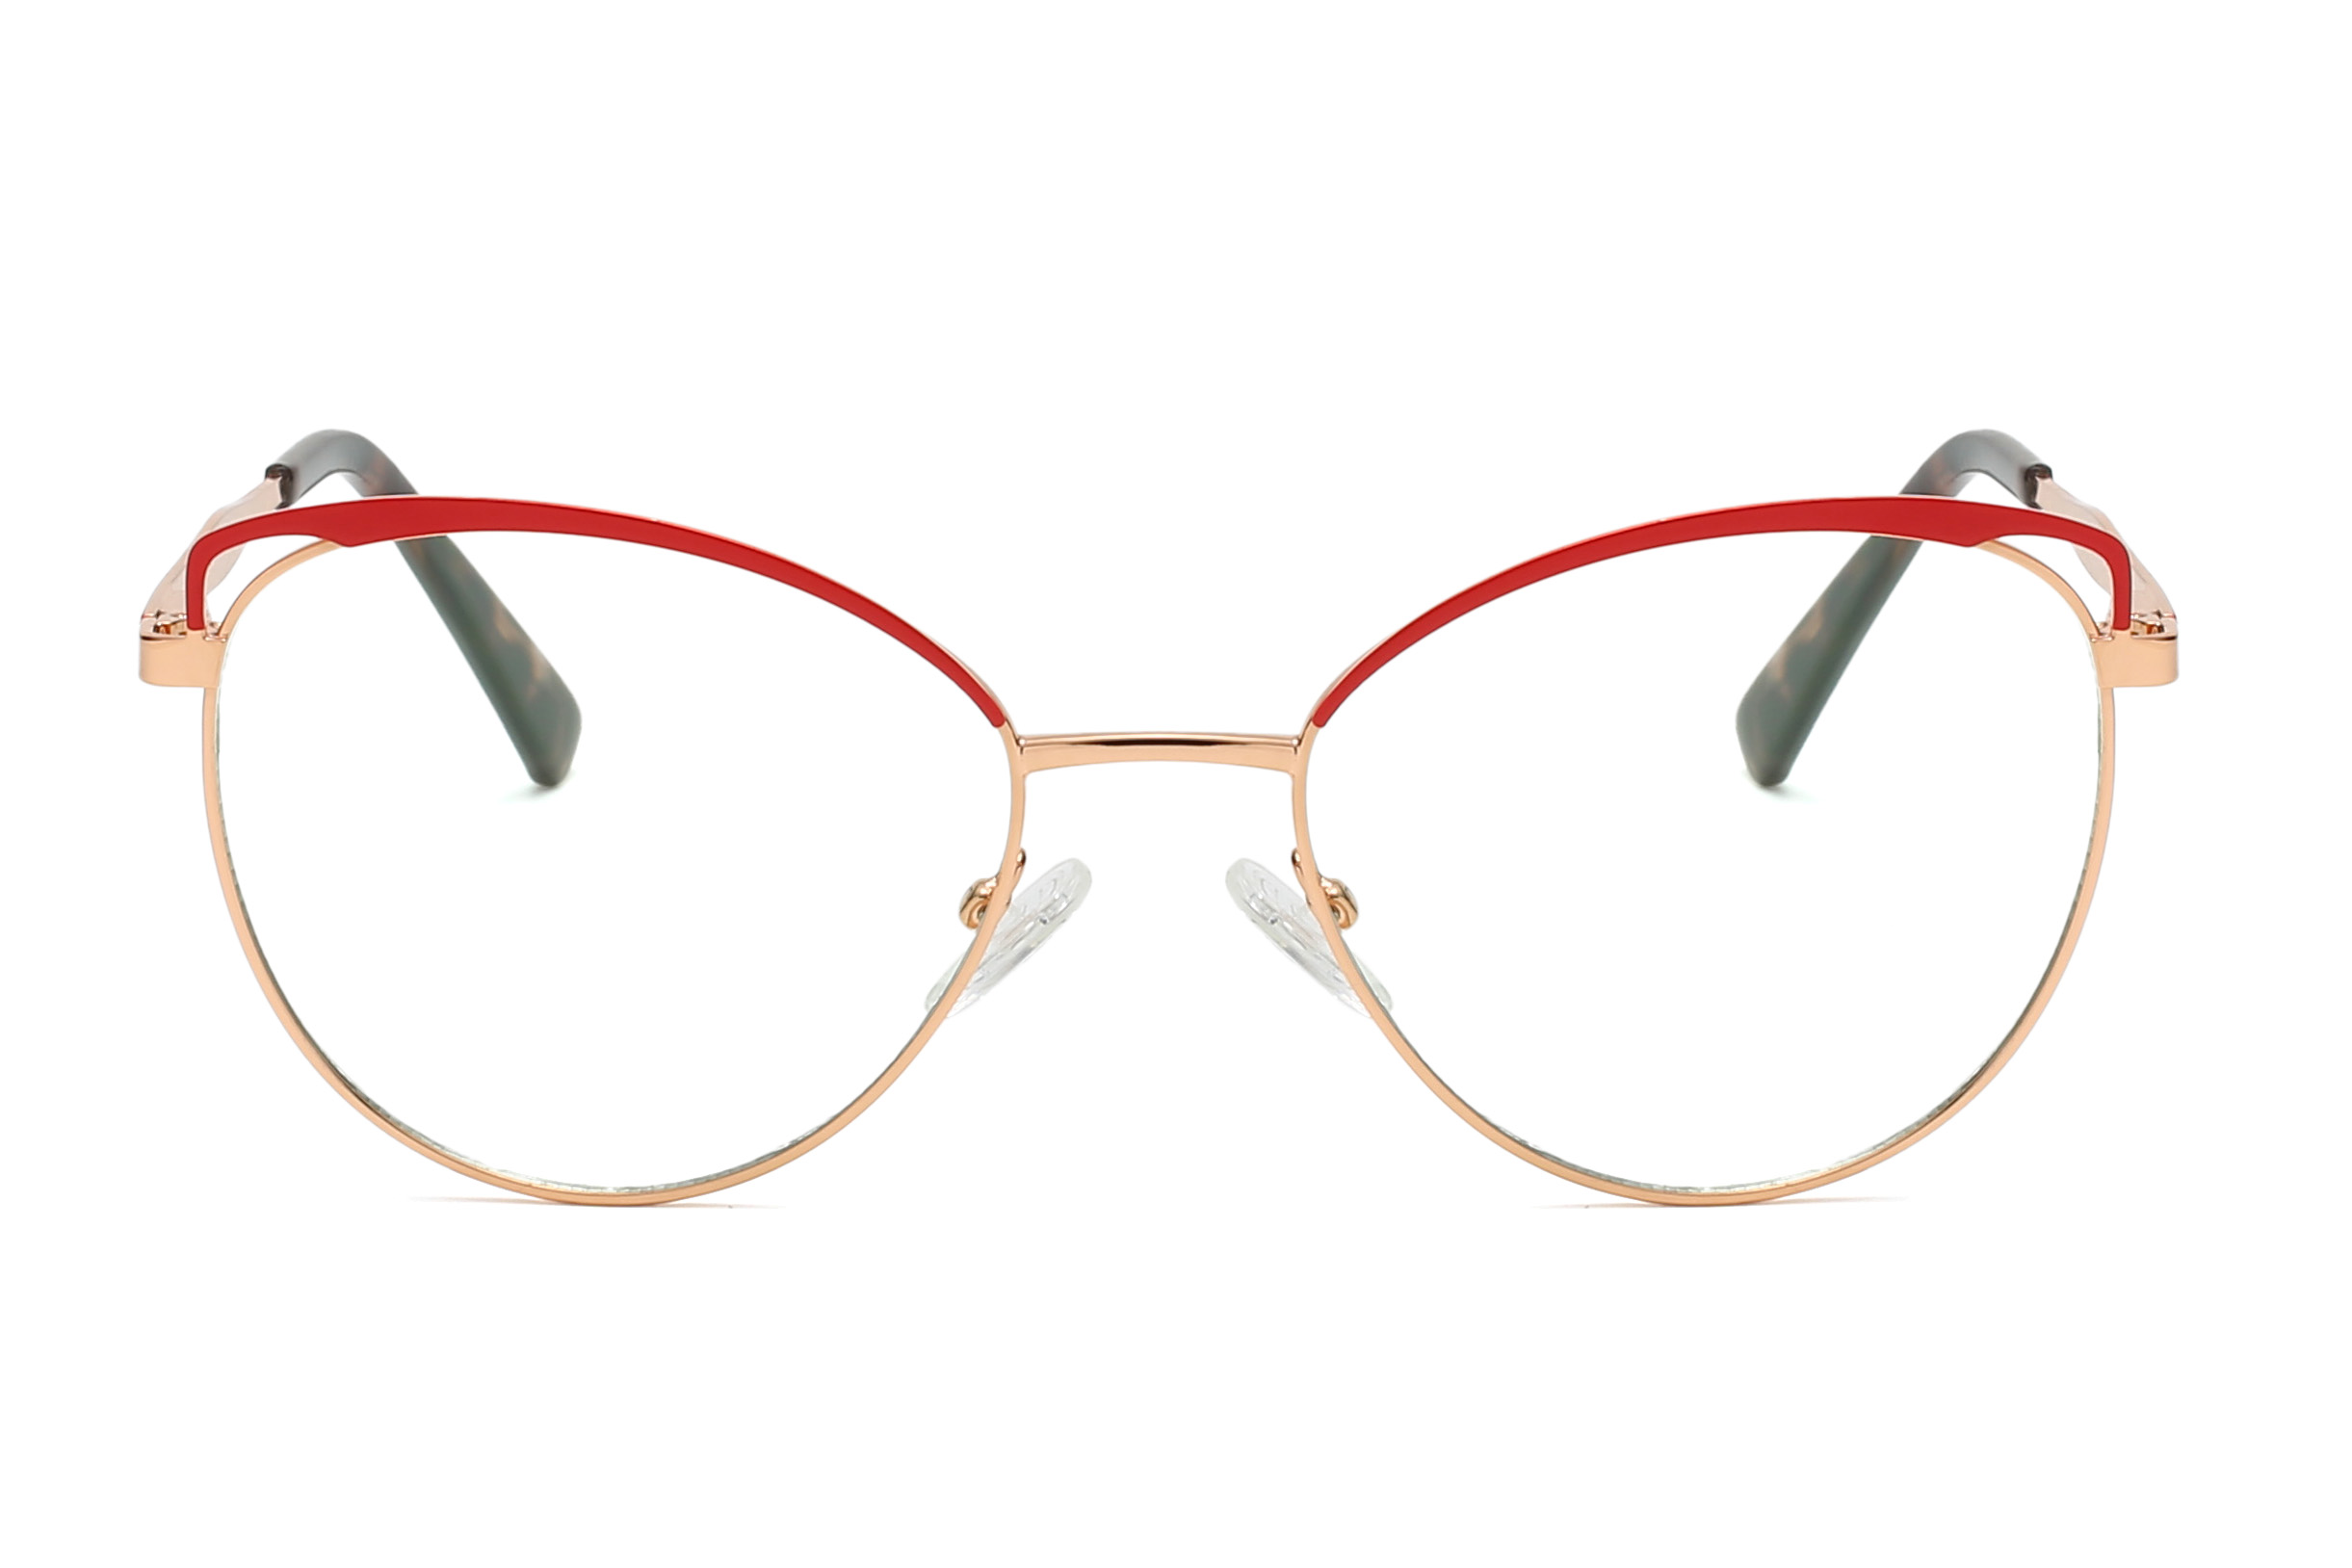 INS HOT Womans Fashion Optical frame Cat Eye Vintage Eyeglasses